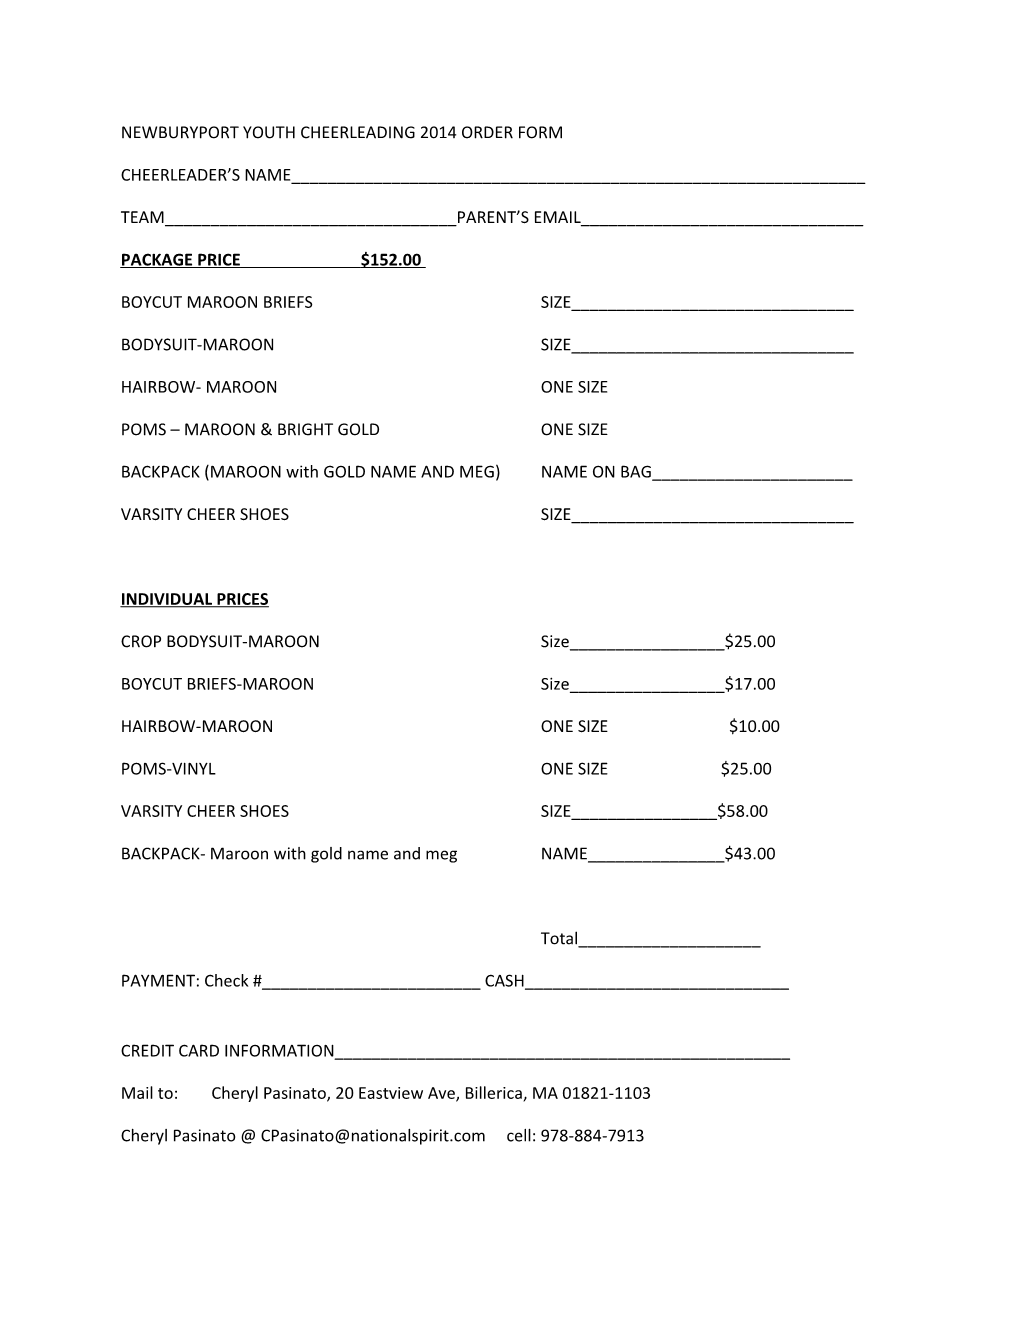 Newburyport Youth Cheerleading 2014 Order Form